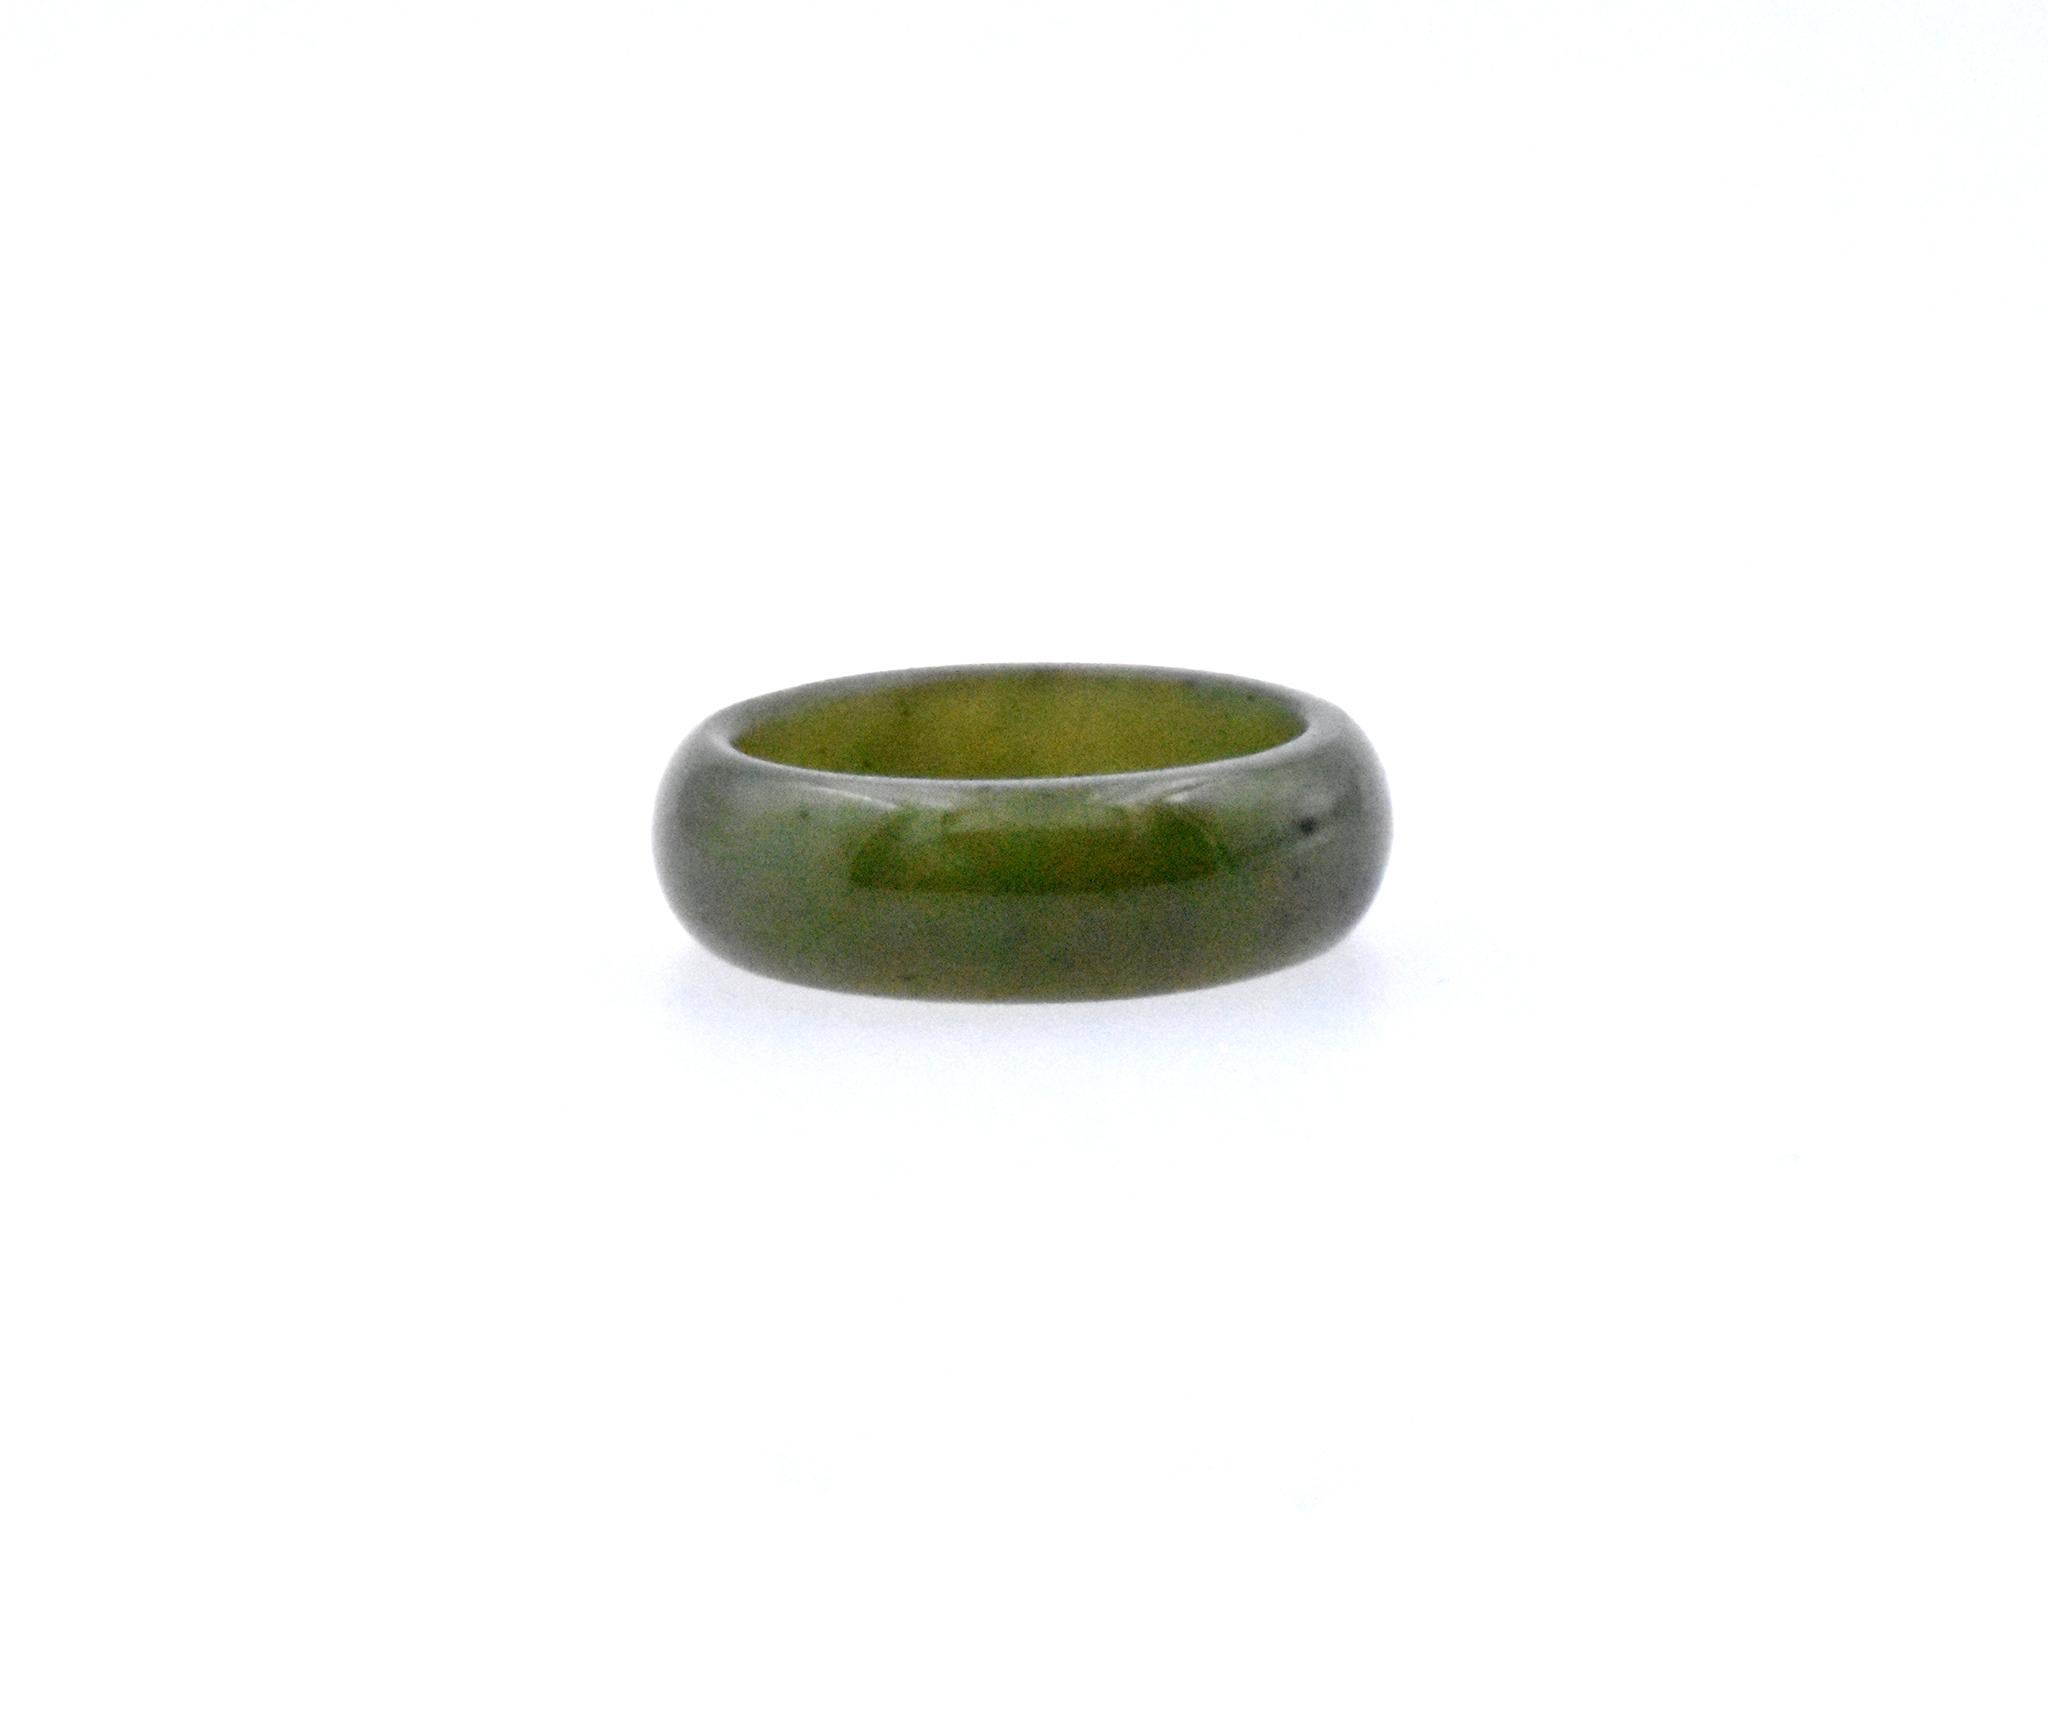 Designer: custom 
Material: jade
Ring Size: 6
Dimensions: ring measures 6.50mm in width
Weight: 2.78 grams